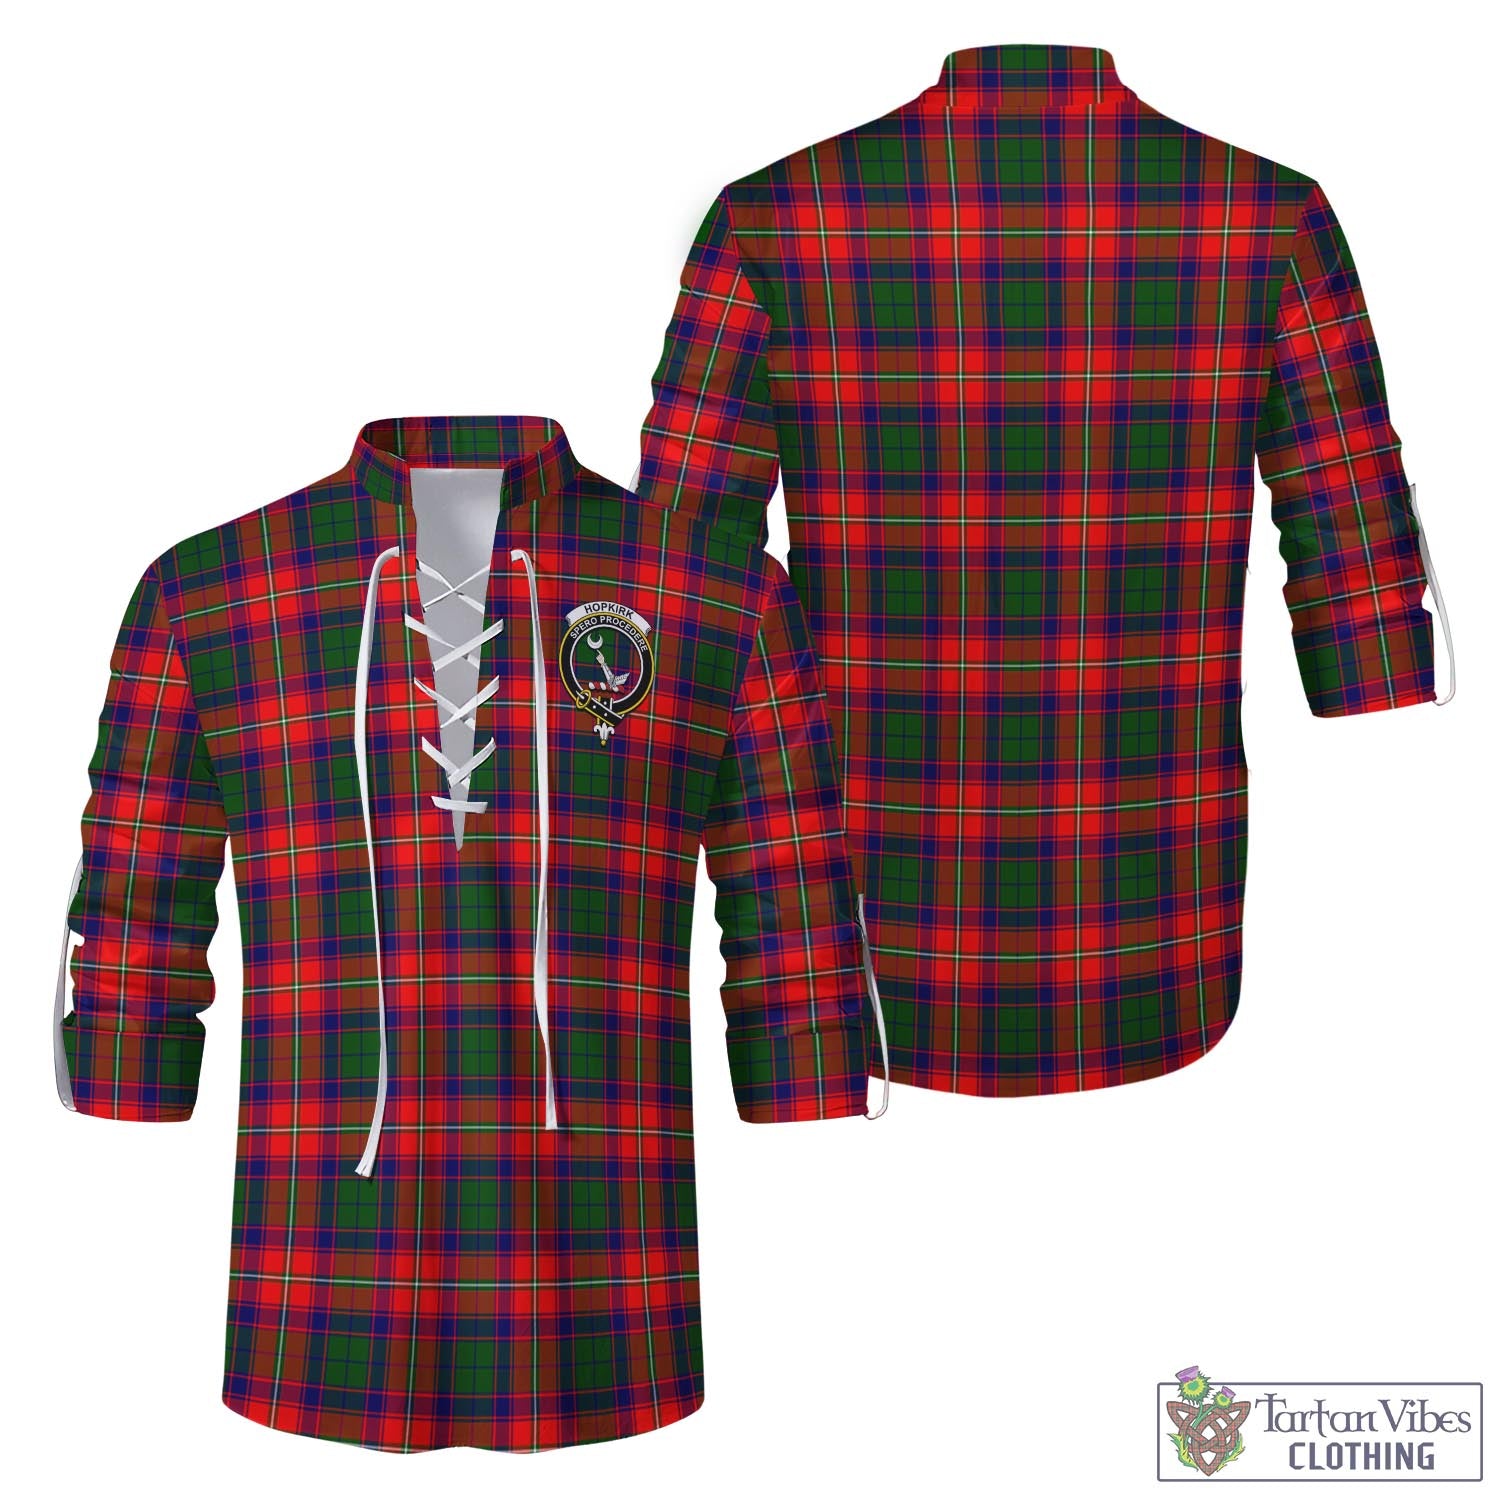 Tartan Vibes Clothing Hopkirk Tartan Men's Scottish Traditional Jacobite Ghillie Kilt Shirt with Family Crest